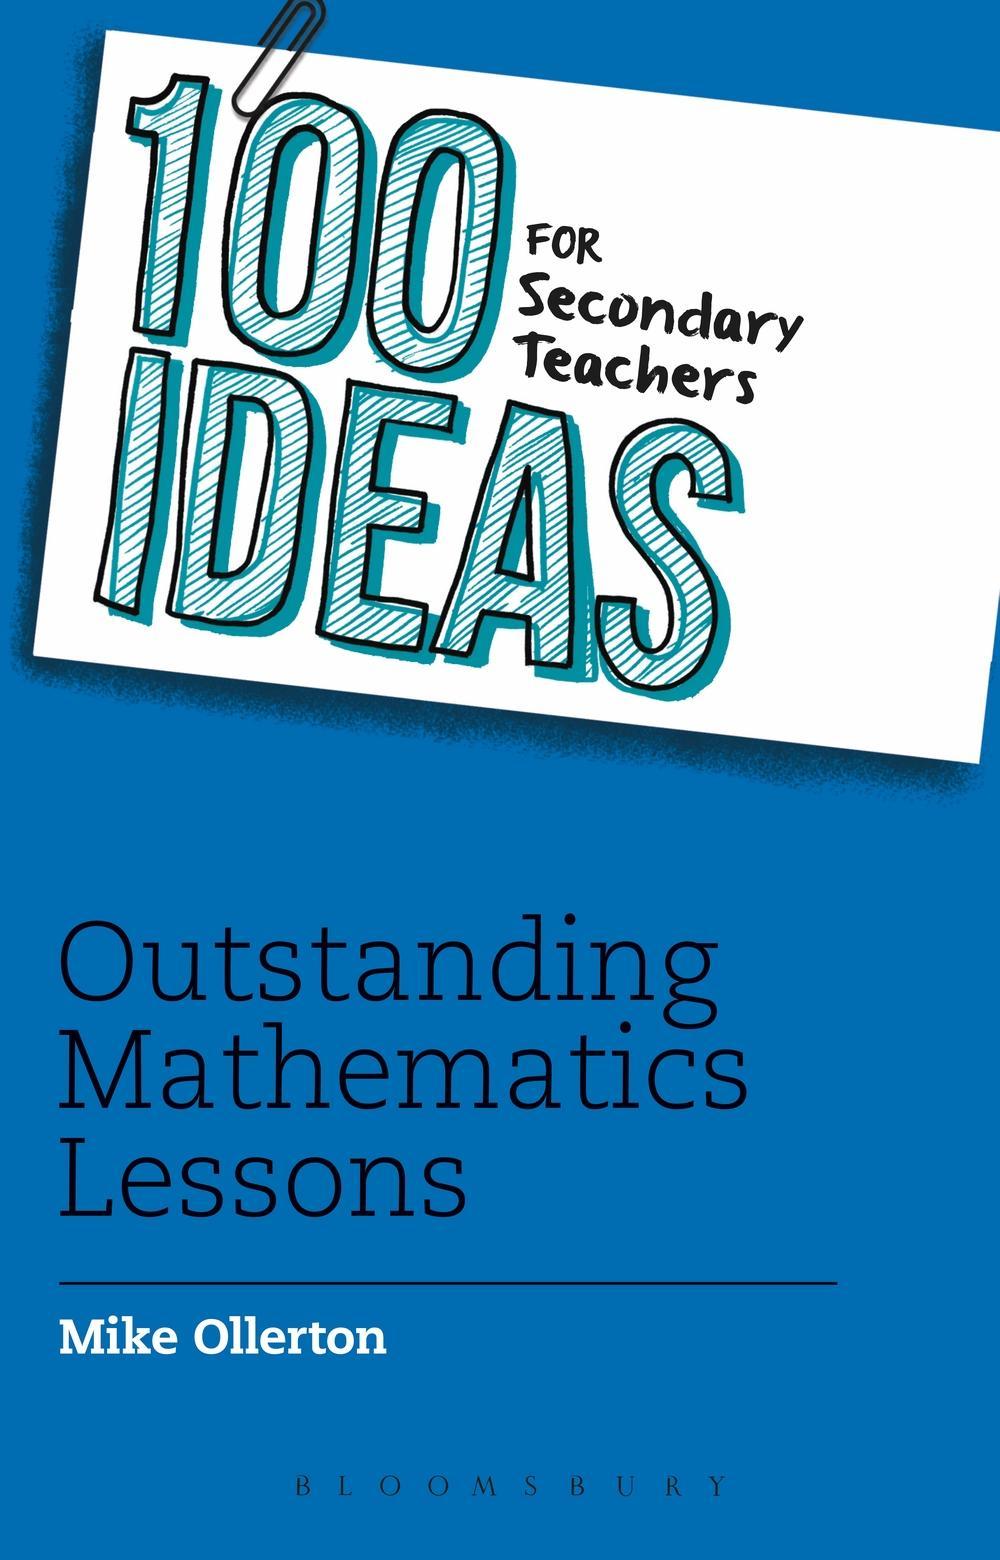 100 Ideas for Secondary Teachers: Outstanding Mathematics Le